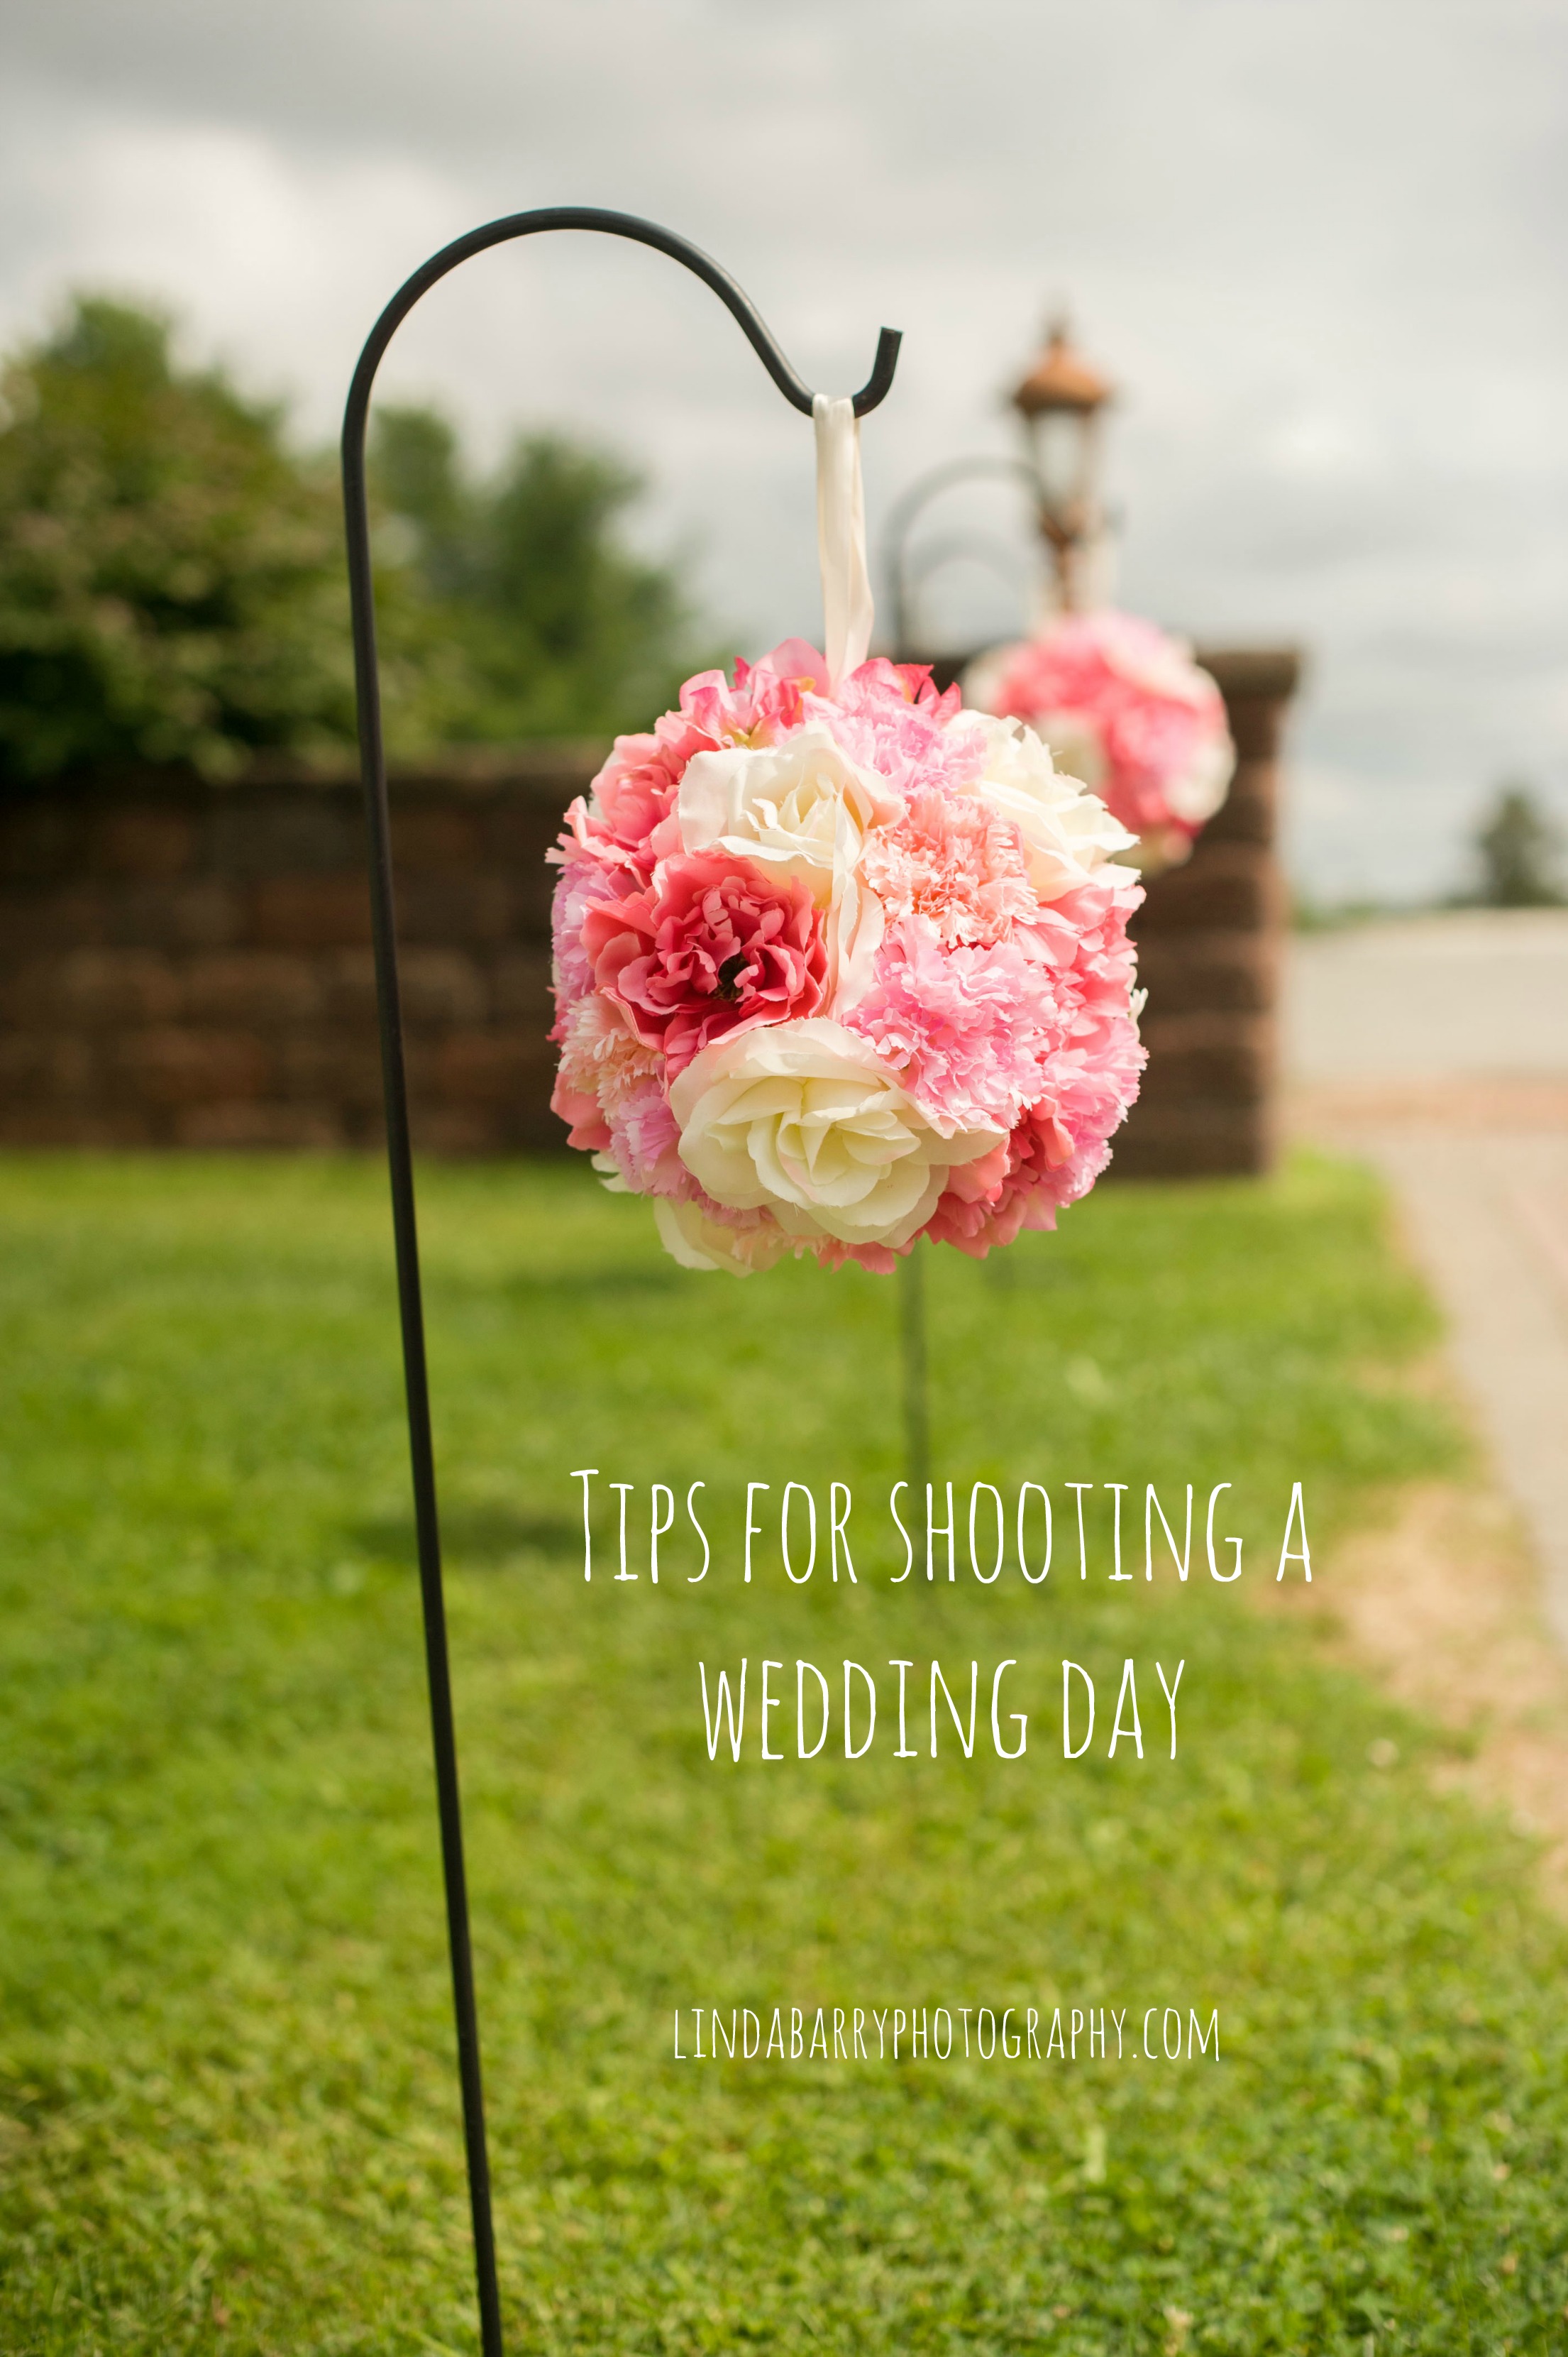 tips for shooting a wedding day, photography tips, portland maine wedding photographer